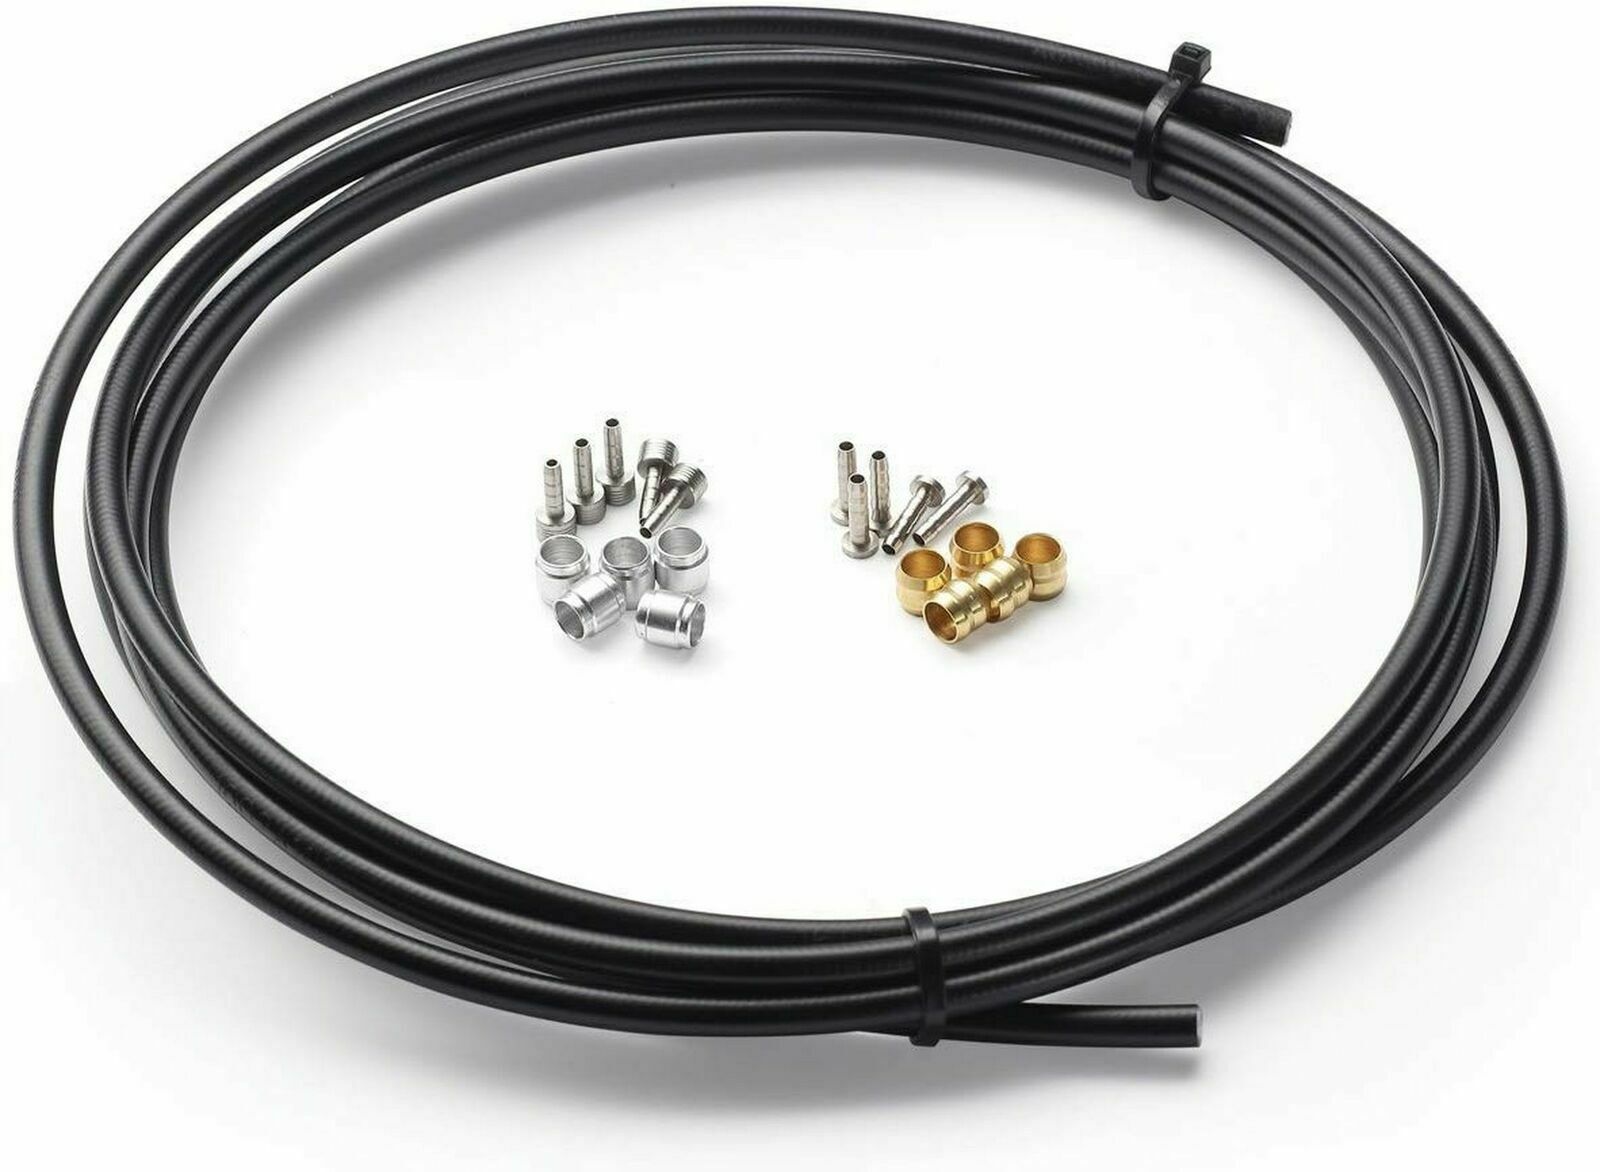 Bh59/bh90 Olive/connector Insert/hydraulic Brake Hose Kit For Shimano Xtr Xt Slx